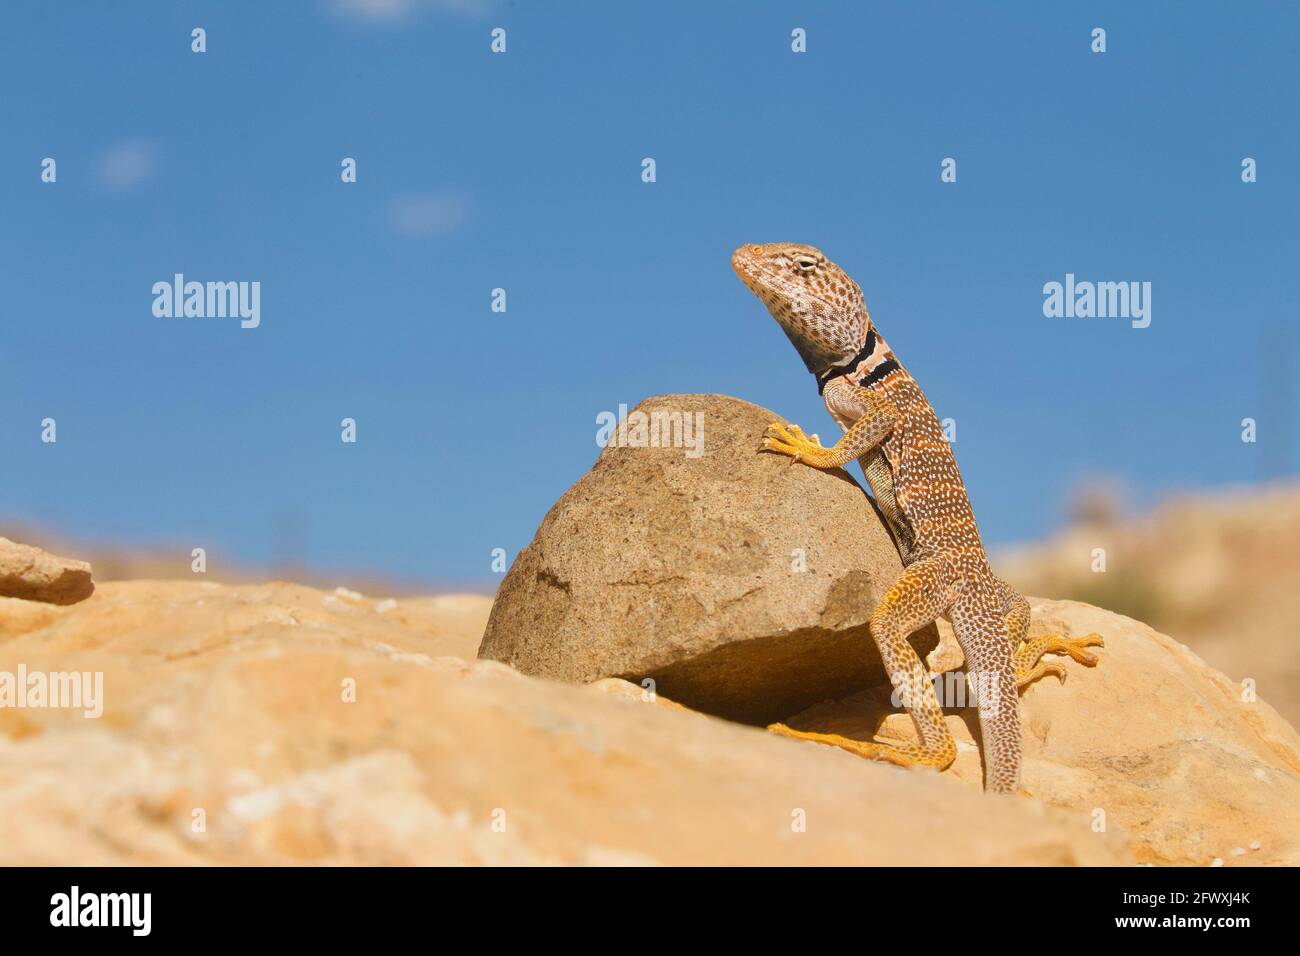 Great Basin Collared Lizard in situ on rocks in the Grand Canyon in Arizona ... a.k.a. Desert Collared Lizard Stock Photo